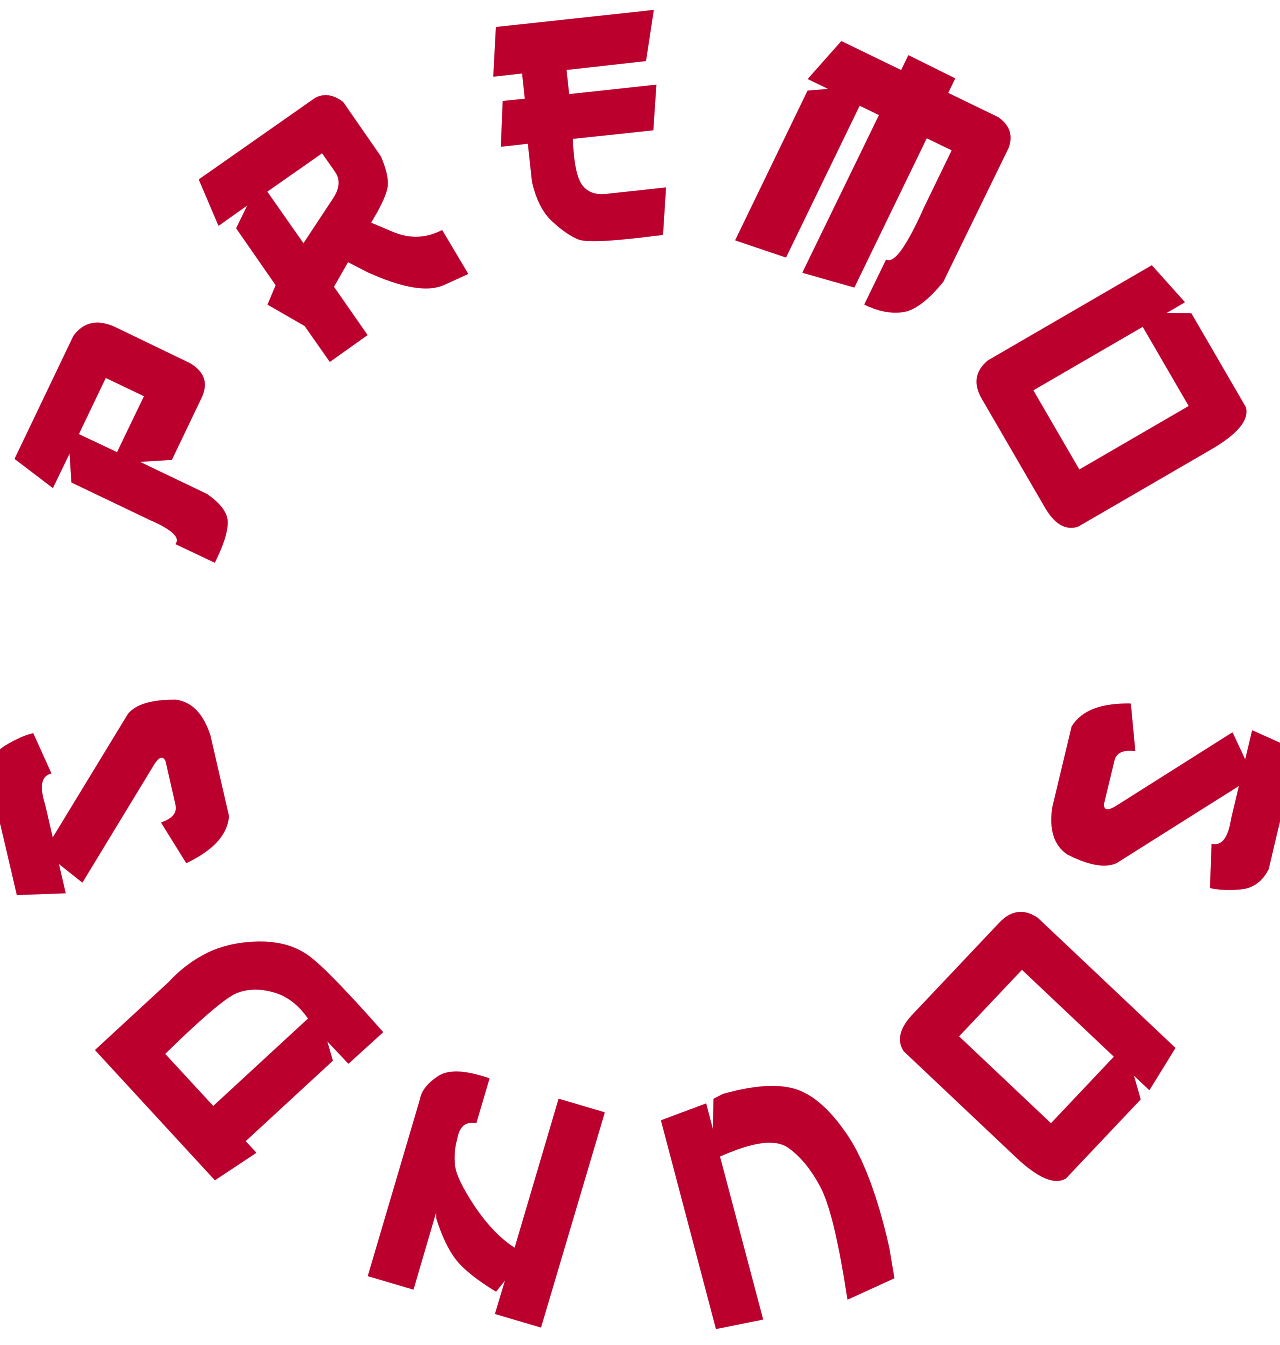 Premo Sounds (International DJ)'s logo